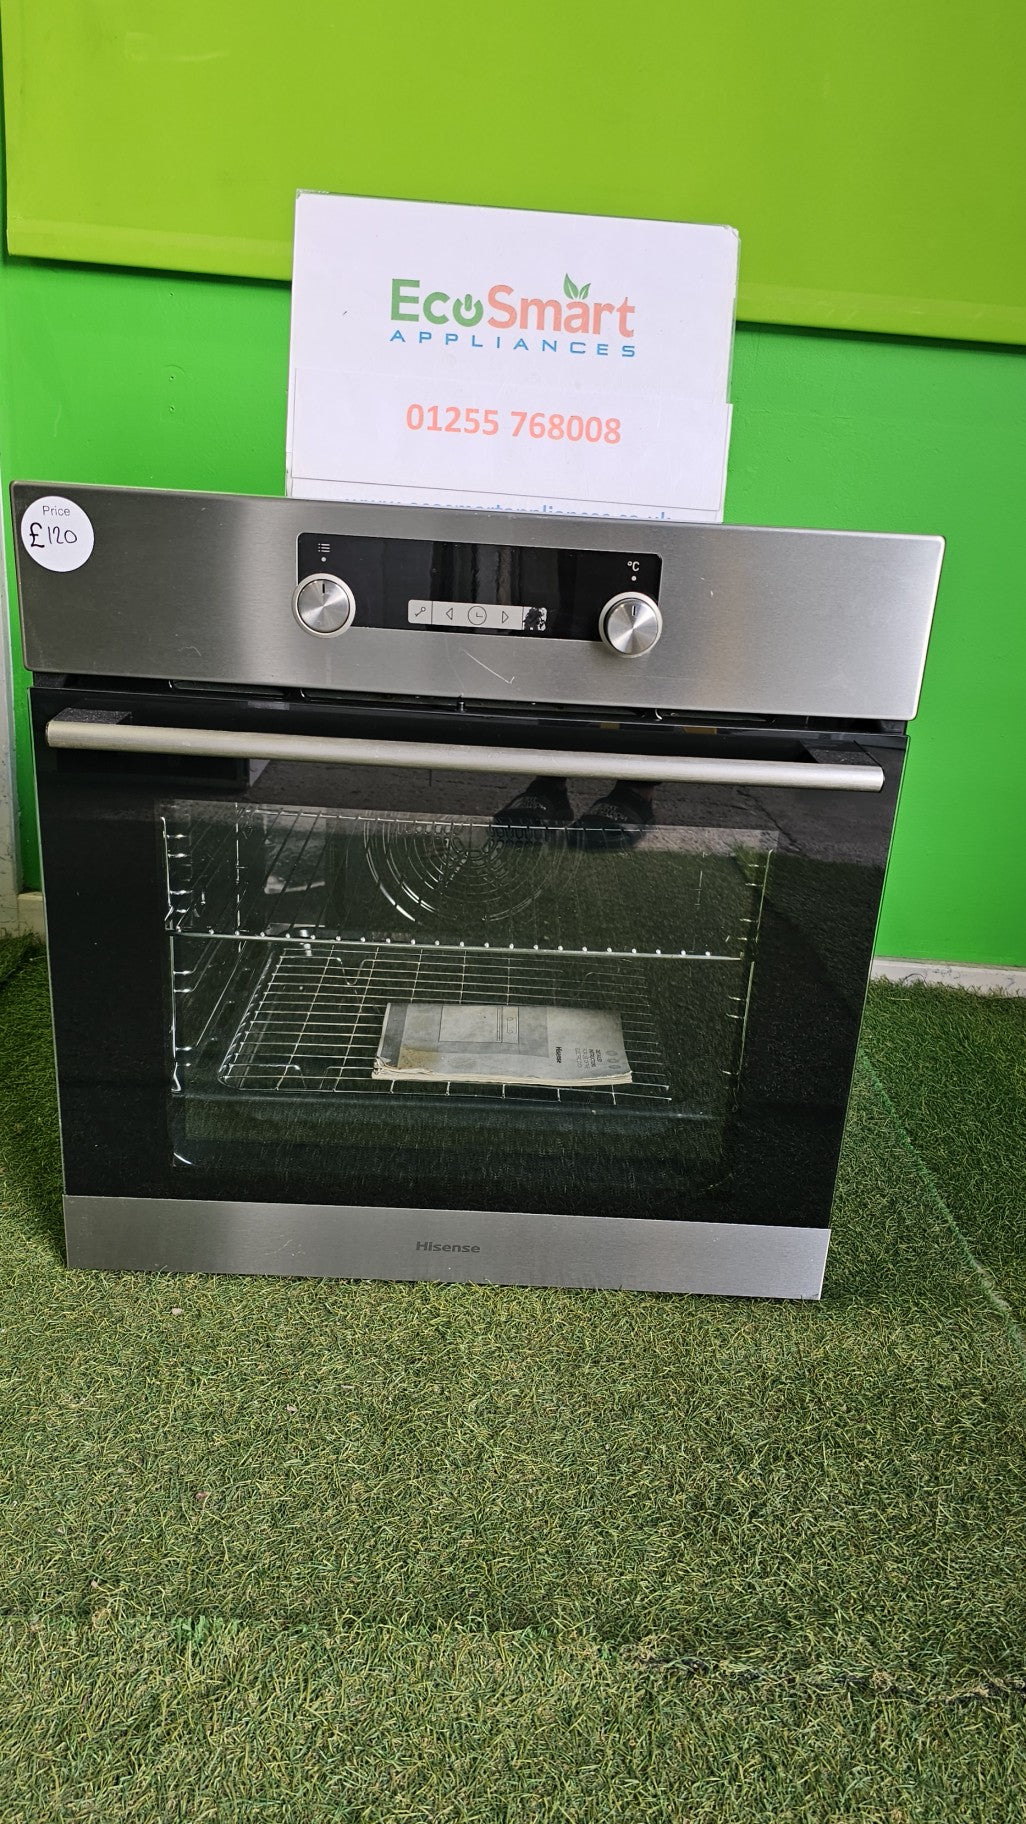 EcoSmart Appliances - Hisense Built in single oven stainless steel (1245)